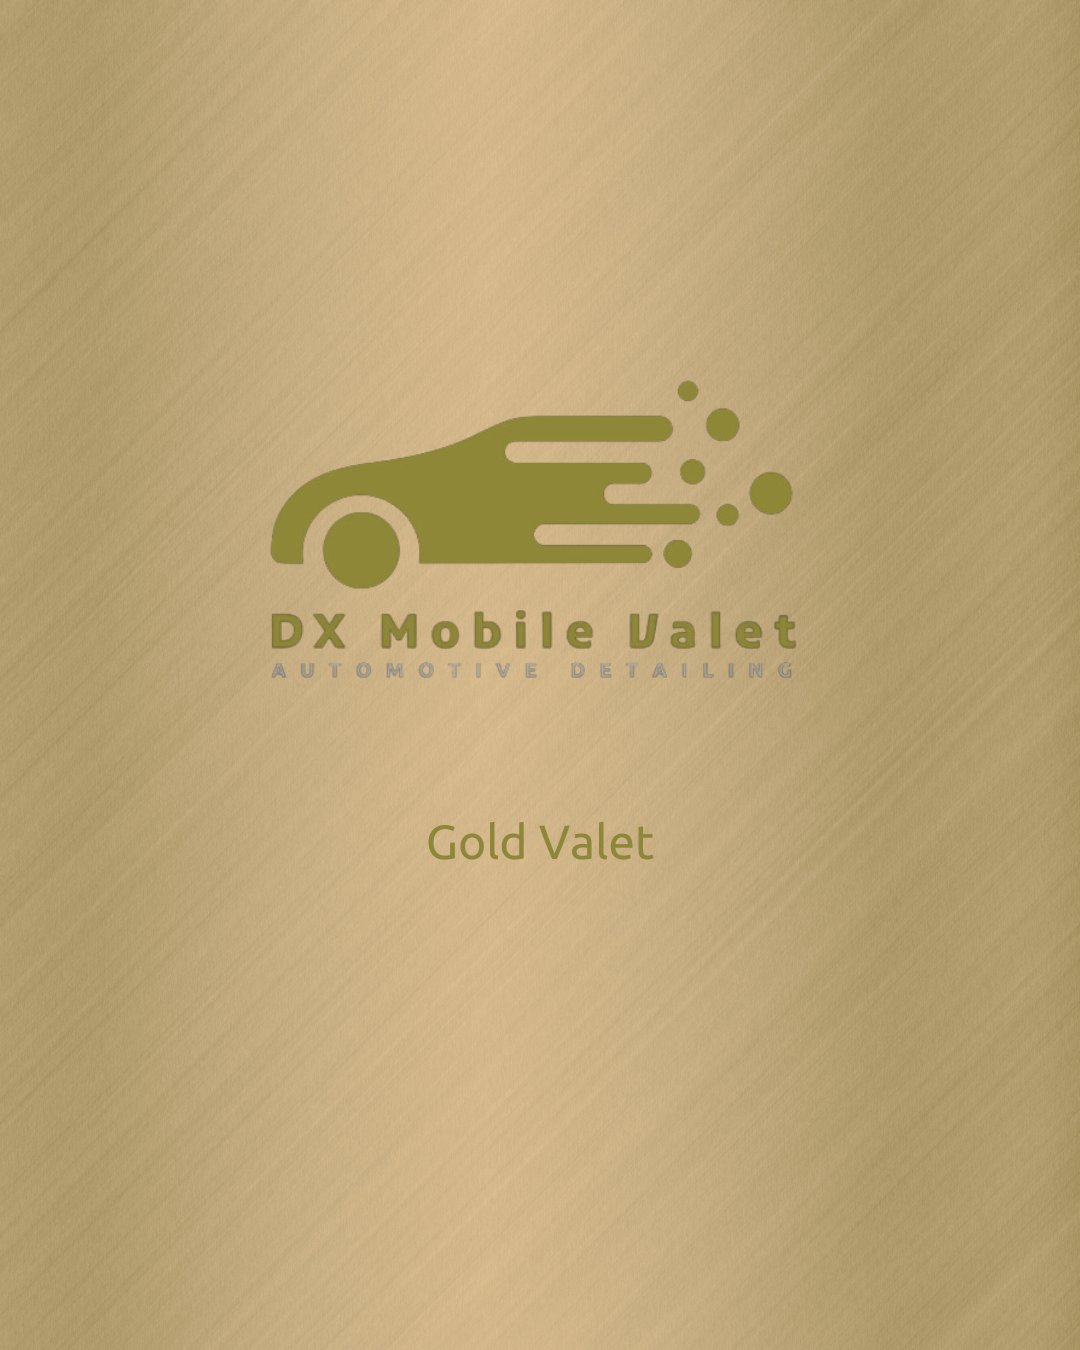 gold valet